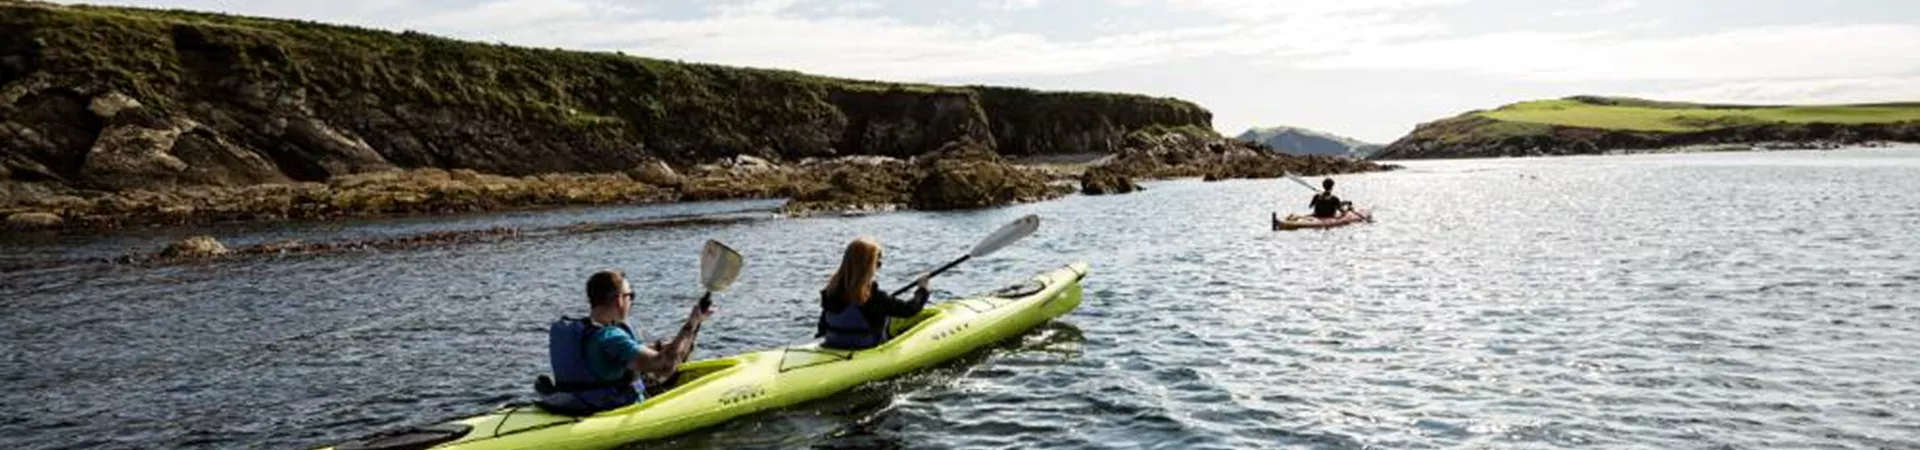 Travellers kayaking on Castlehaven Bay